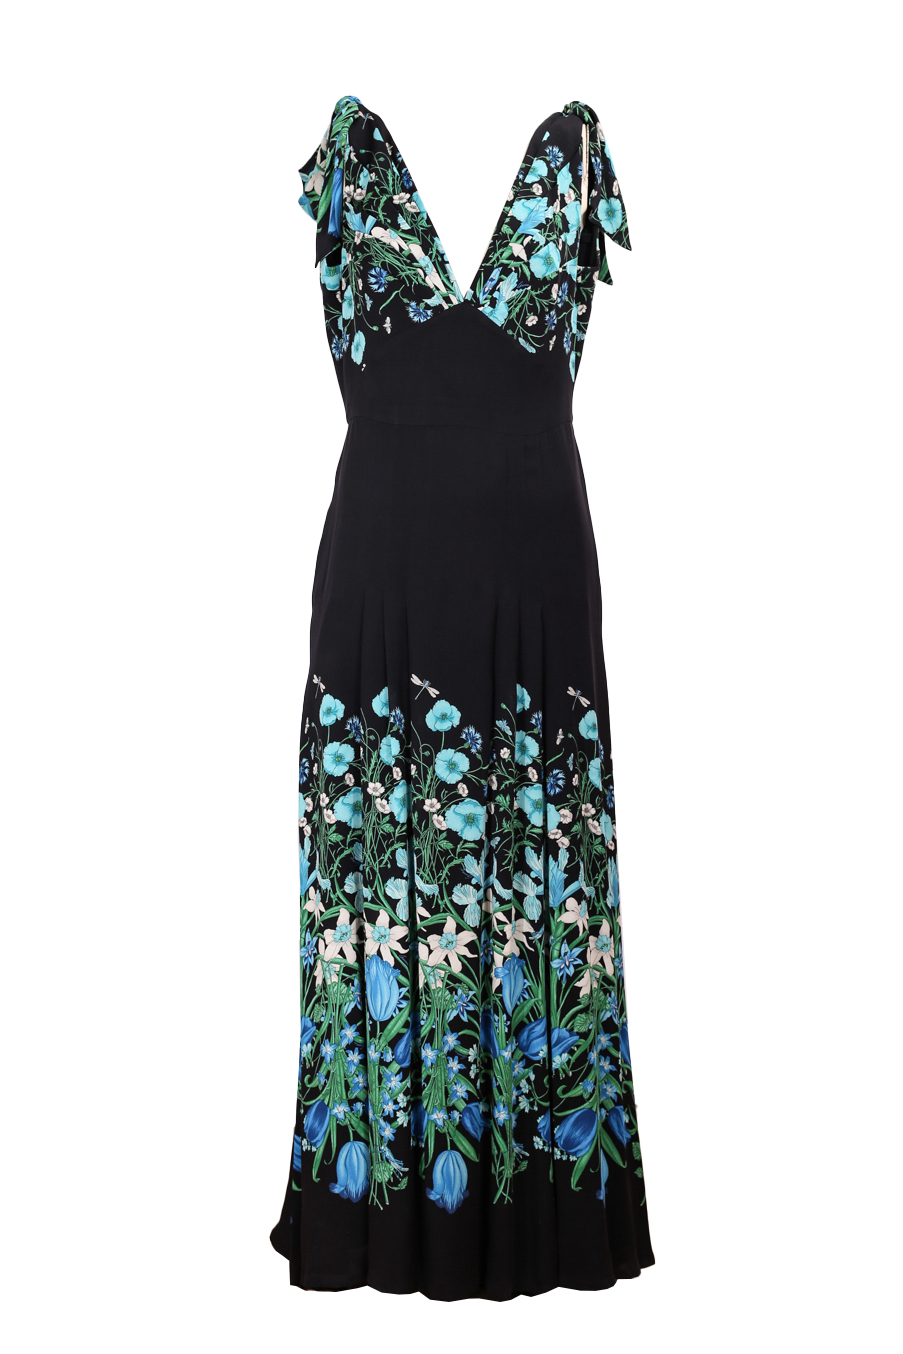 Gucci V-neckline Maxi Black Silk Dress with Floral Print - Preowned